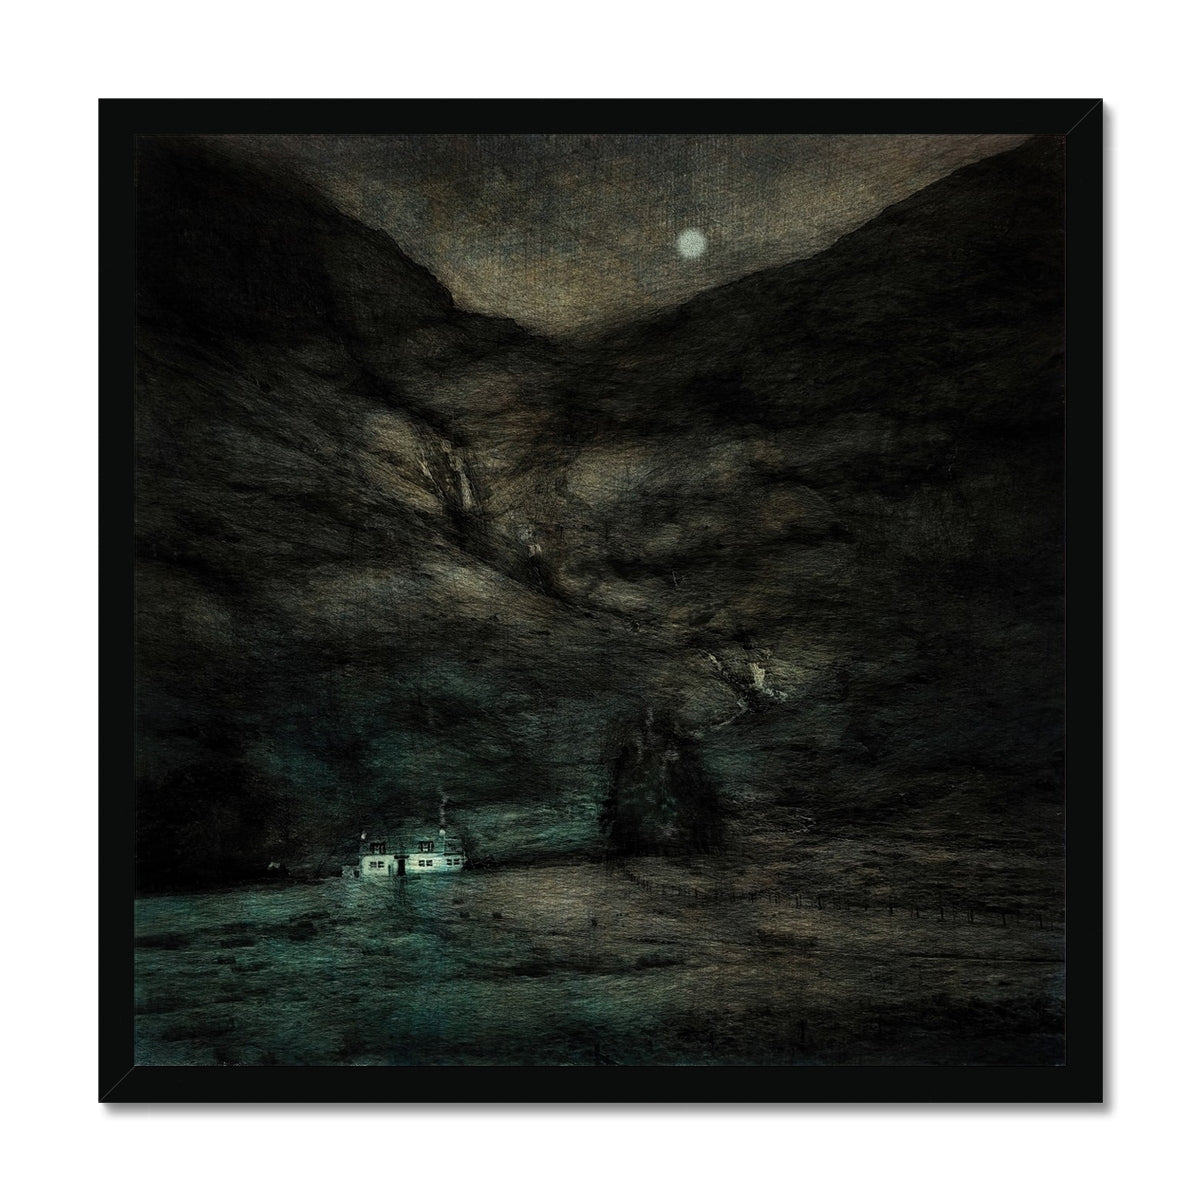 Glencoe Cottage Moonlight Painting | Framed Prints From Scotland-Framed Prints-Glencoe Art Gallery-20"x20"-Black Frame-Paintings, Prints, Homeware, Art Gifts From Scotland By Scottish Artist Kevin Hunter